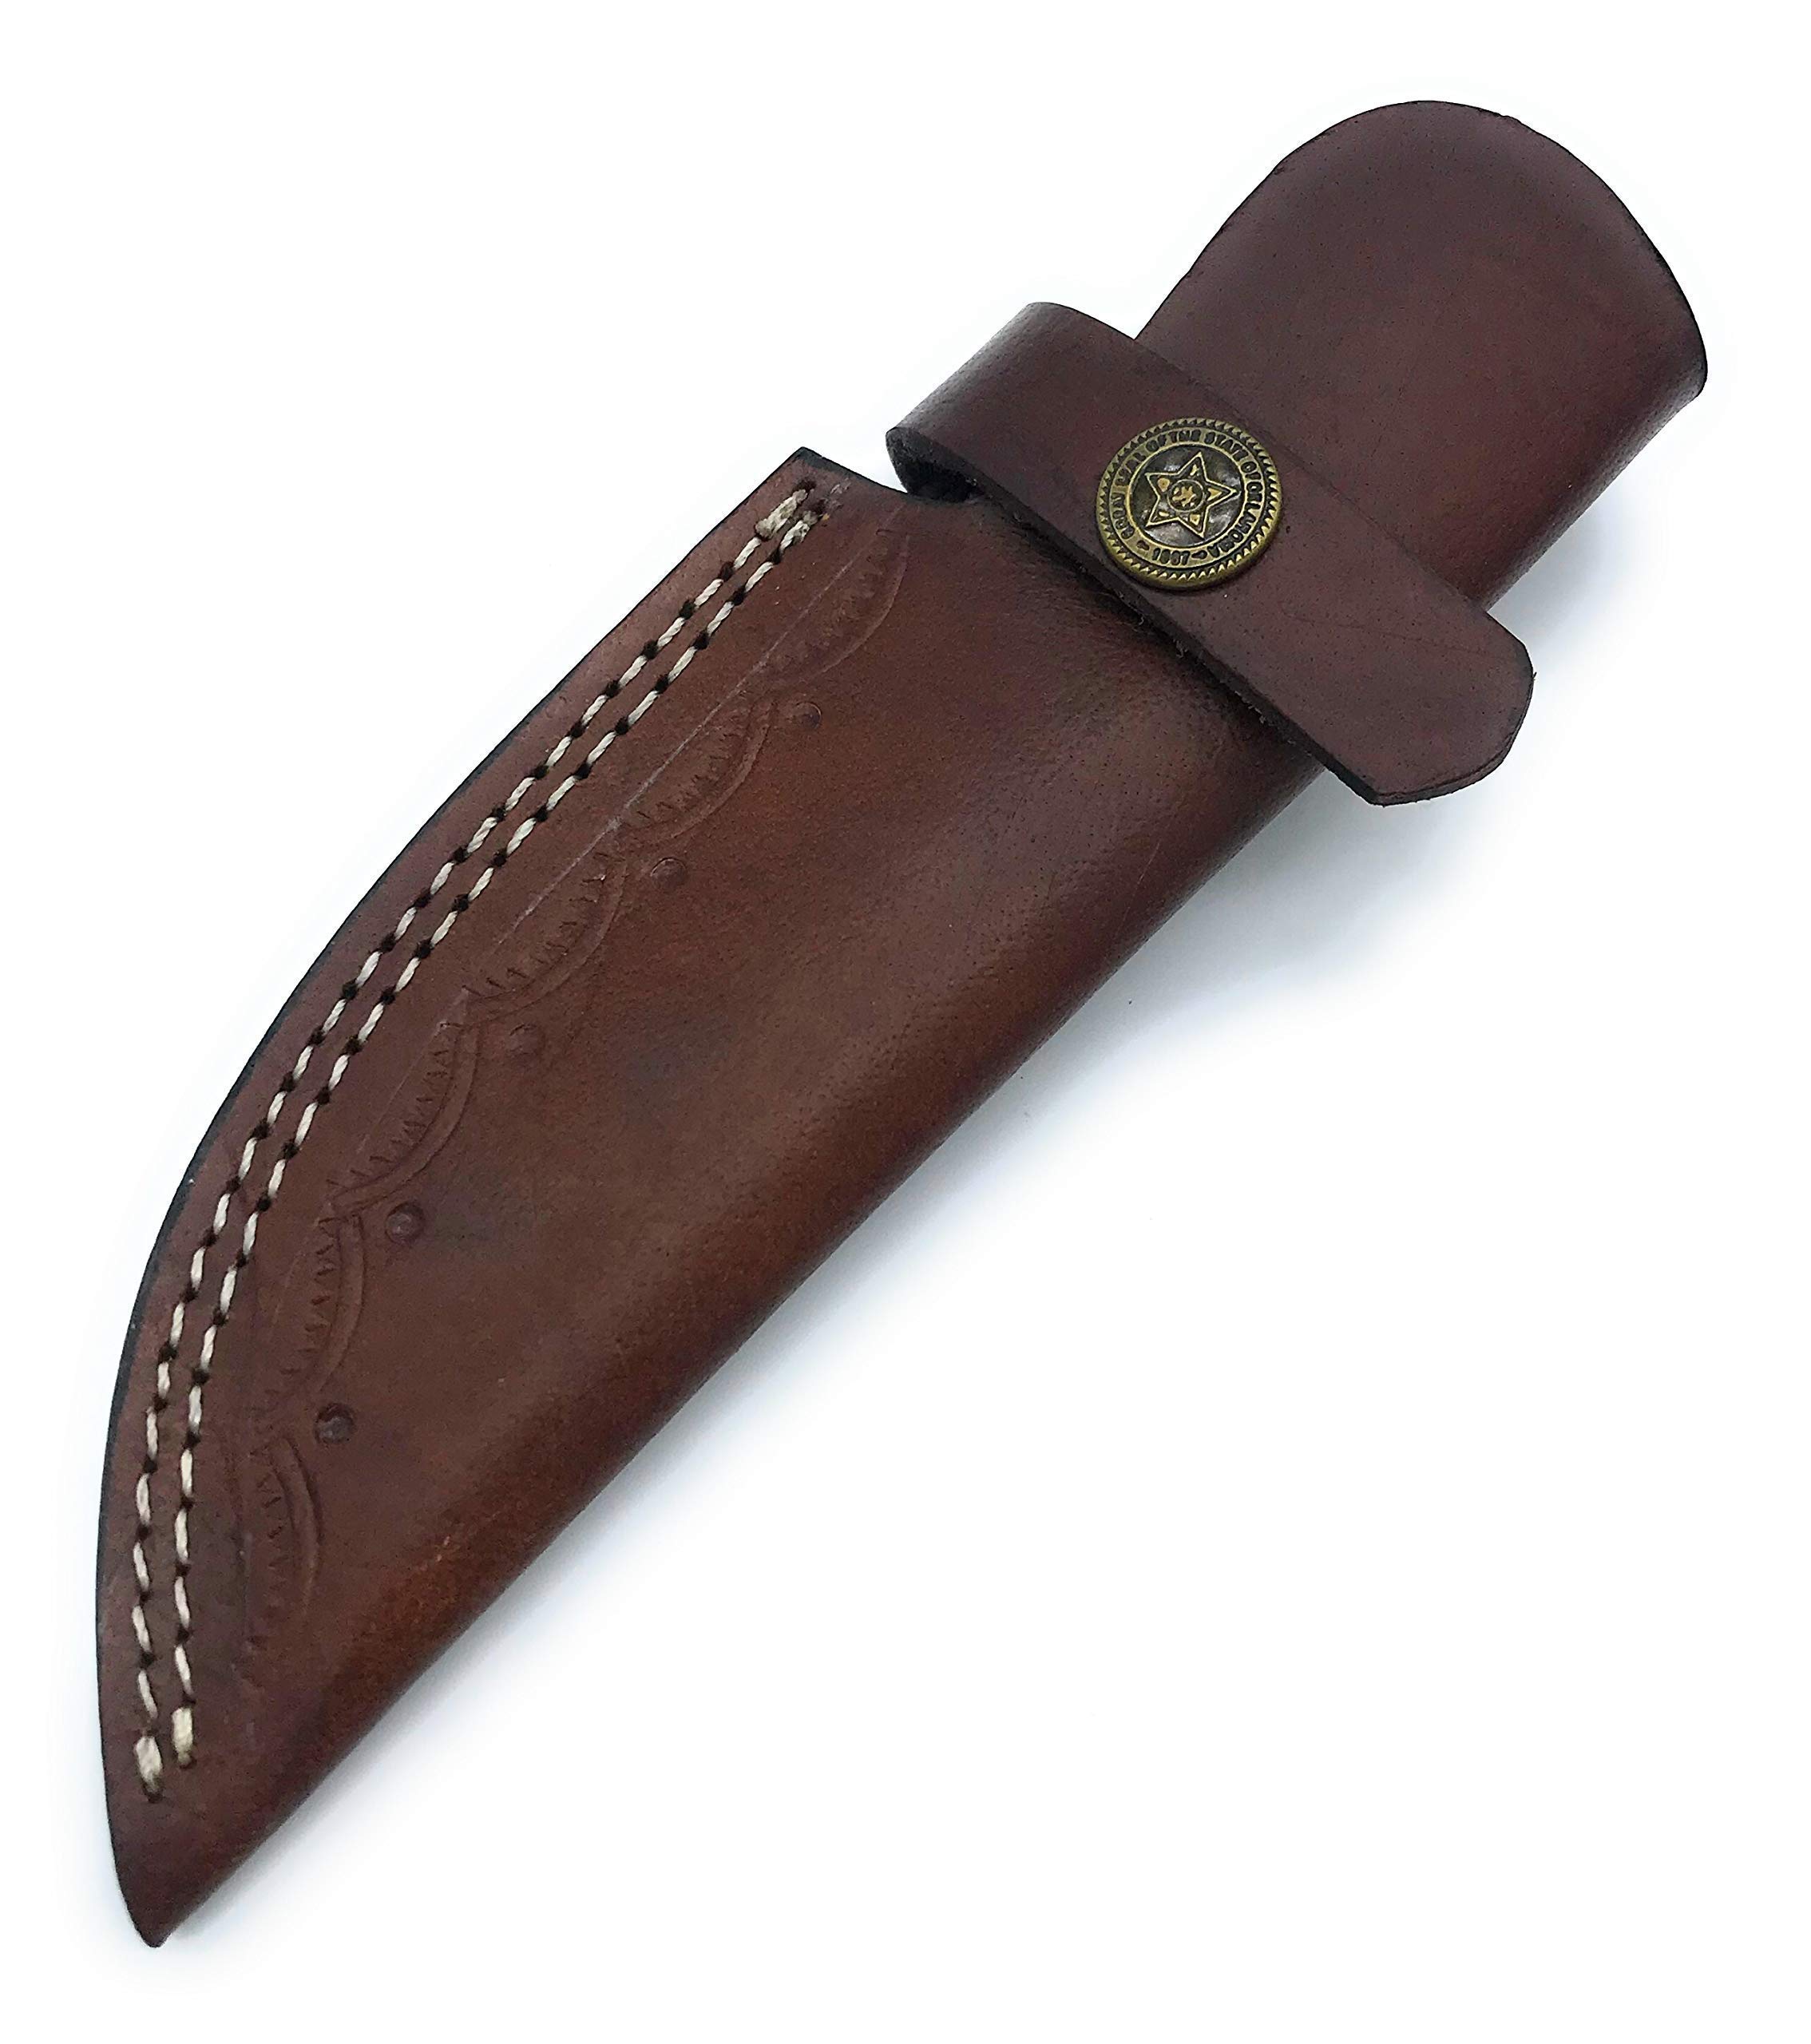 7" long custom handmade leather sheath for 4" cutting blade knife